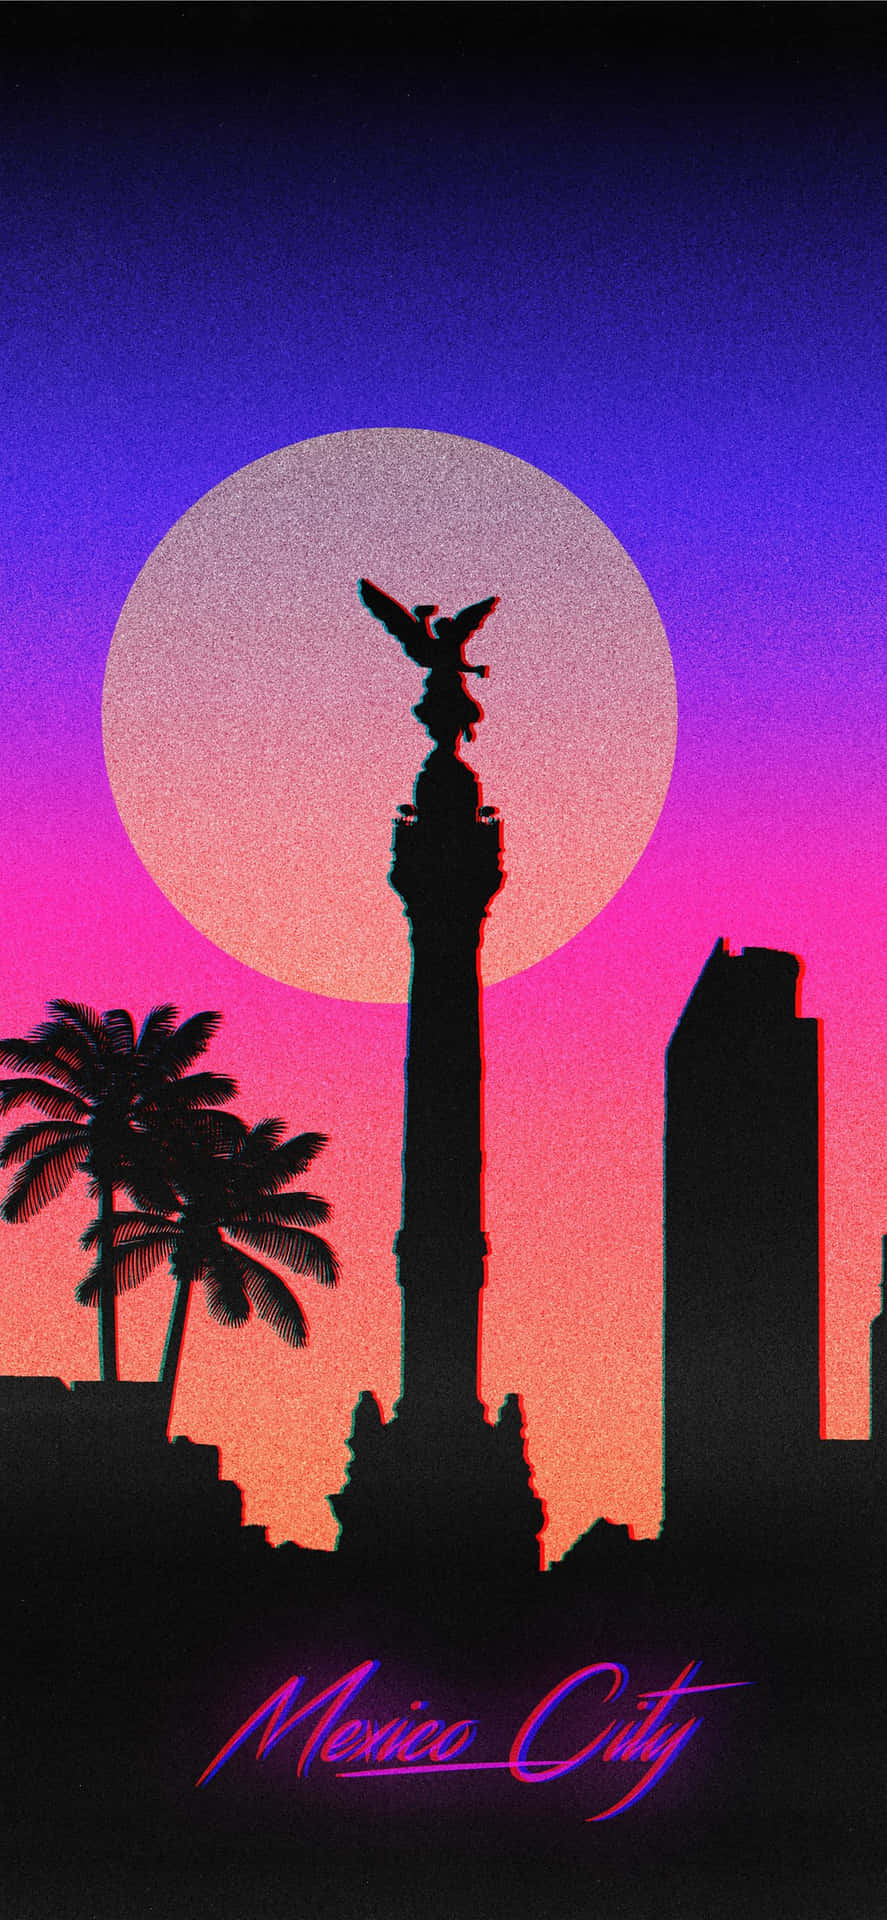 Mexico City Retro Vibe Artwork Wallpaper